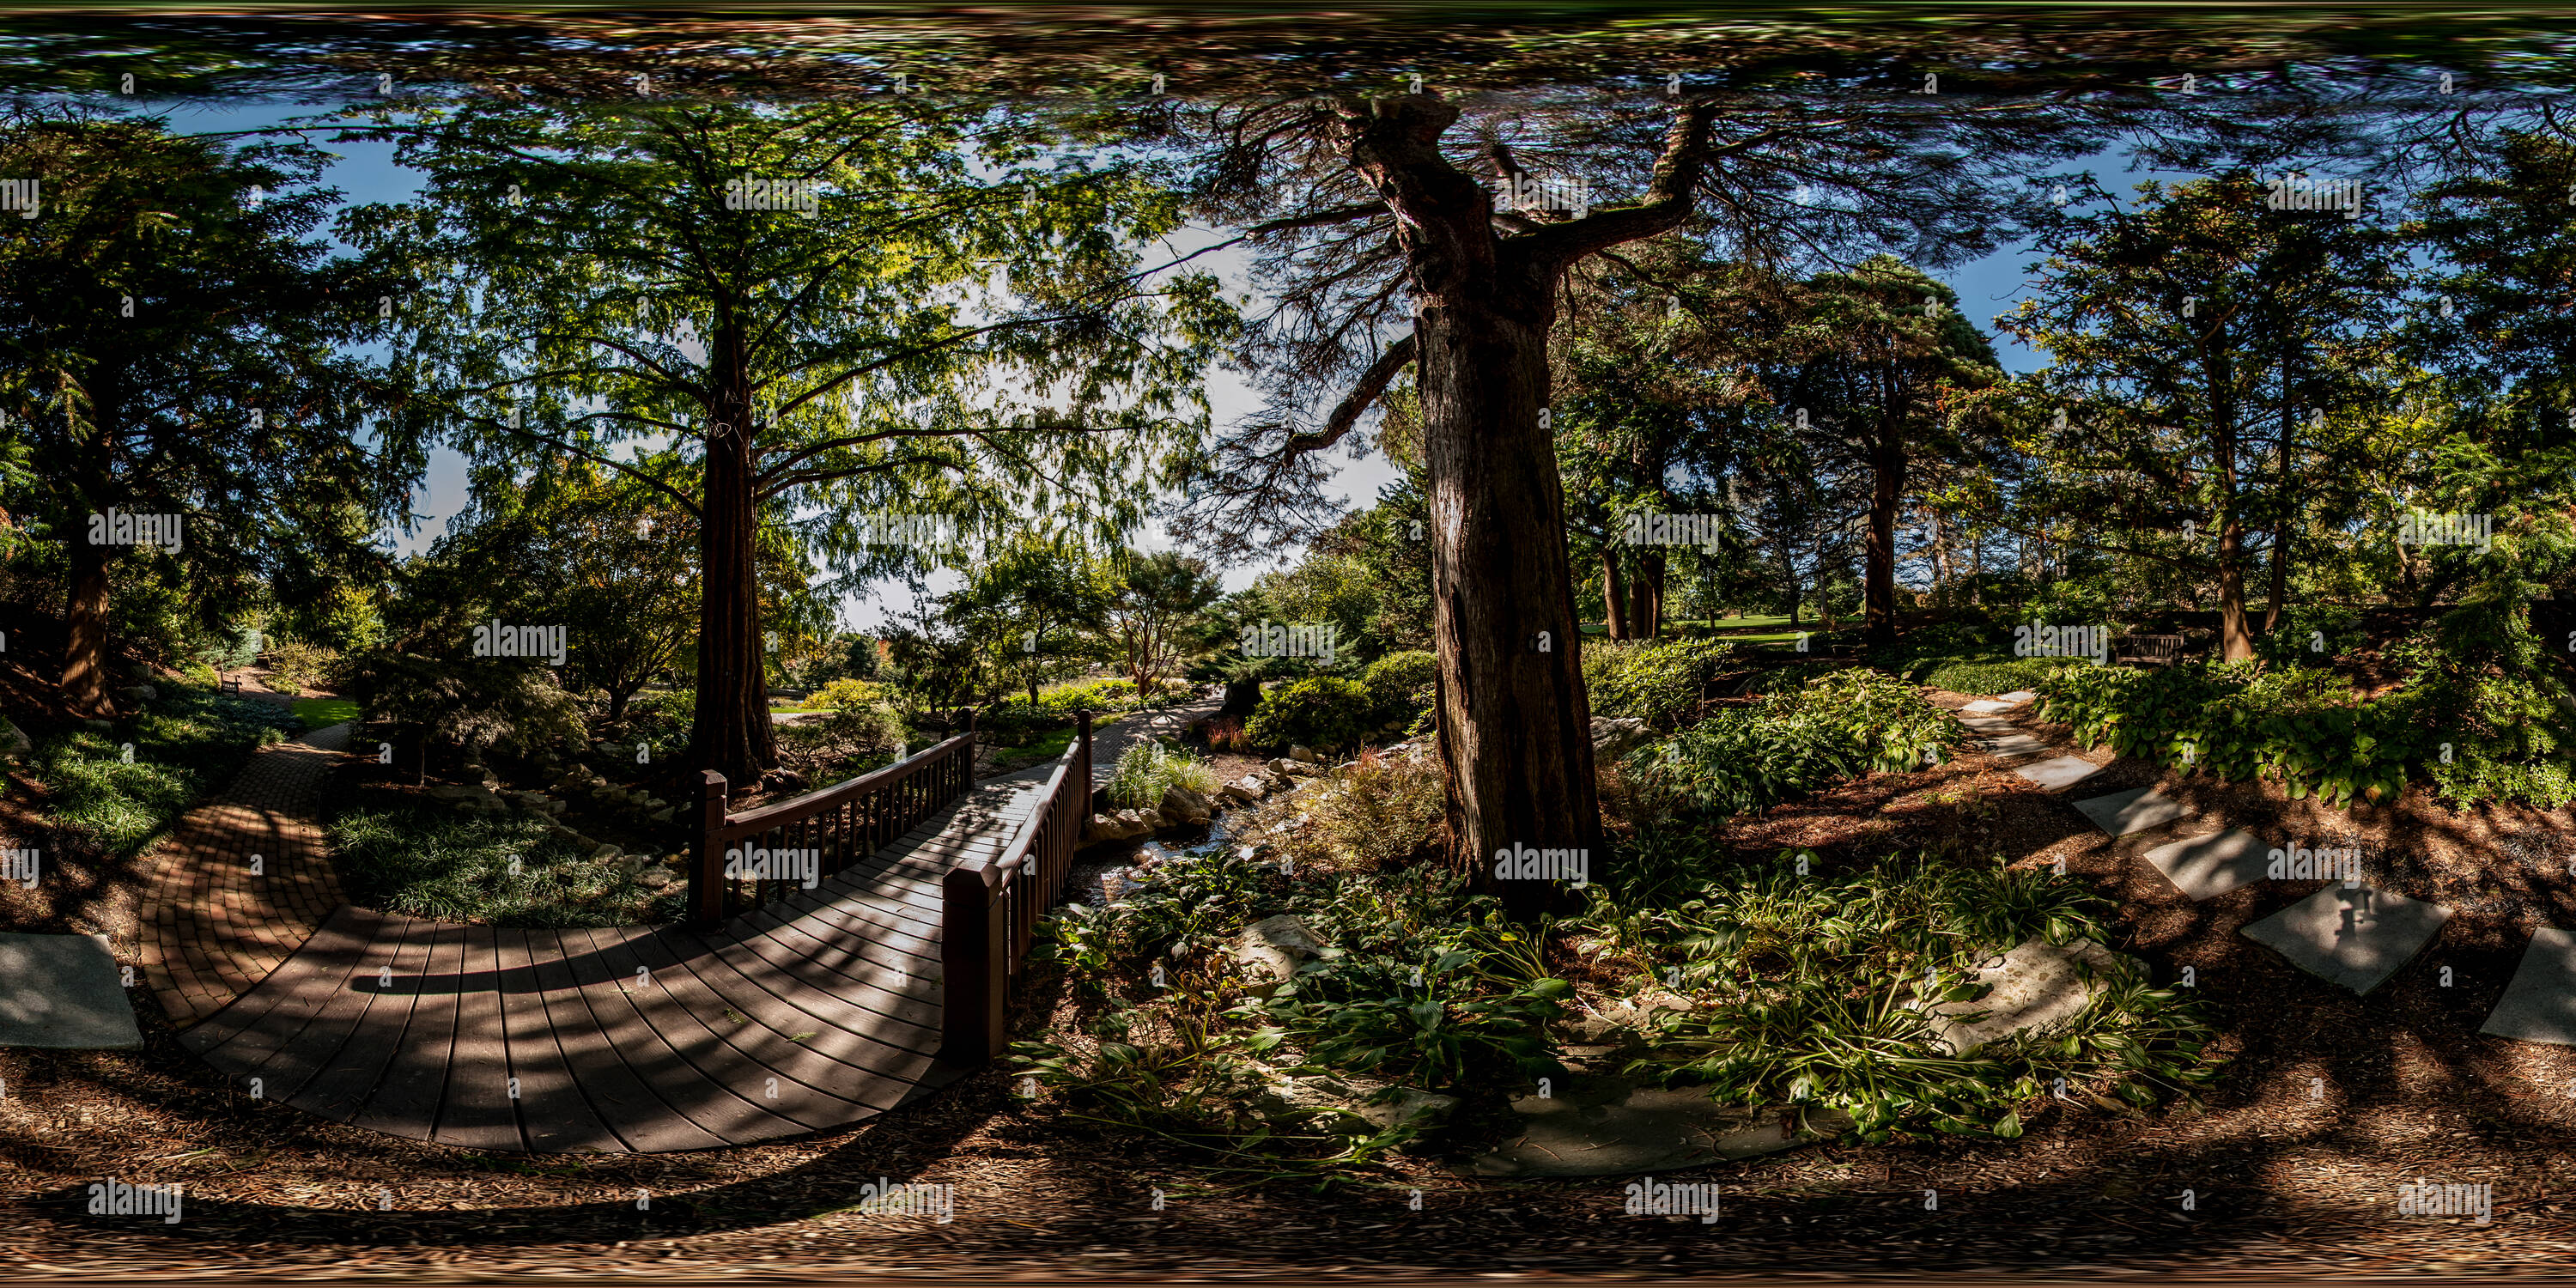 360 View Of Hershey Gardens Hershey Pa 229167312 Alamy